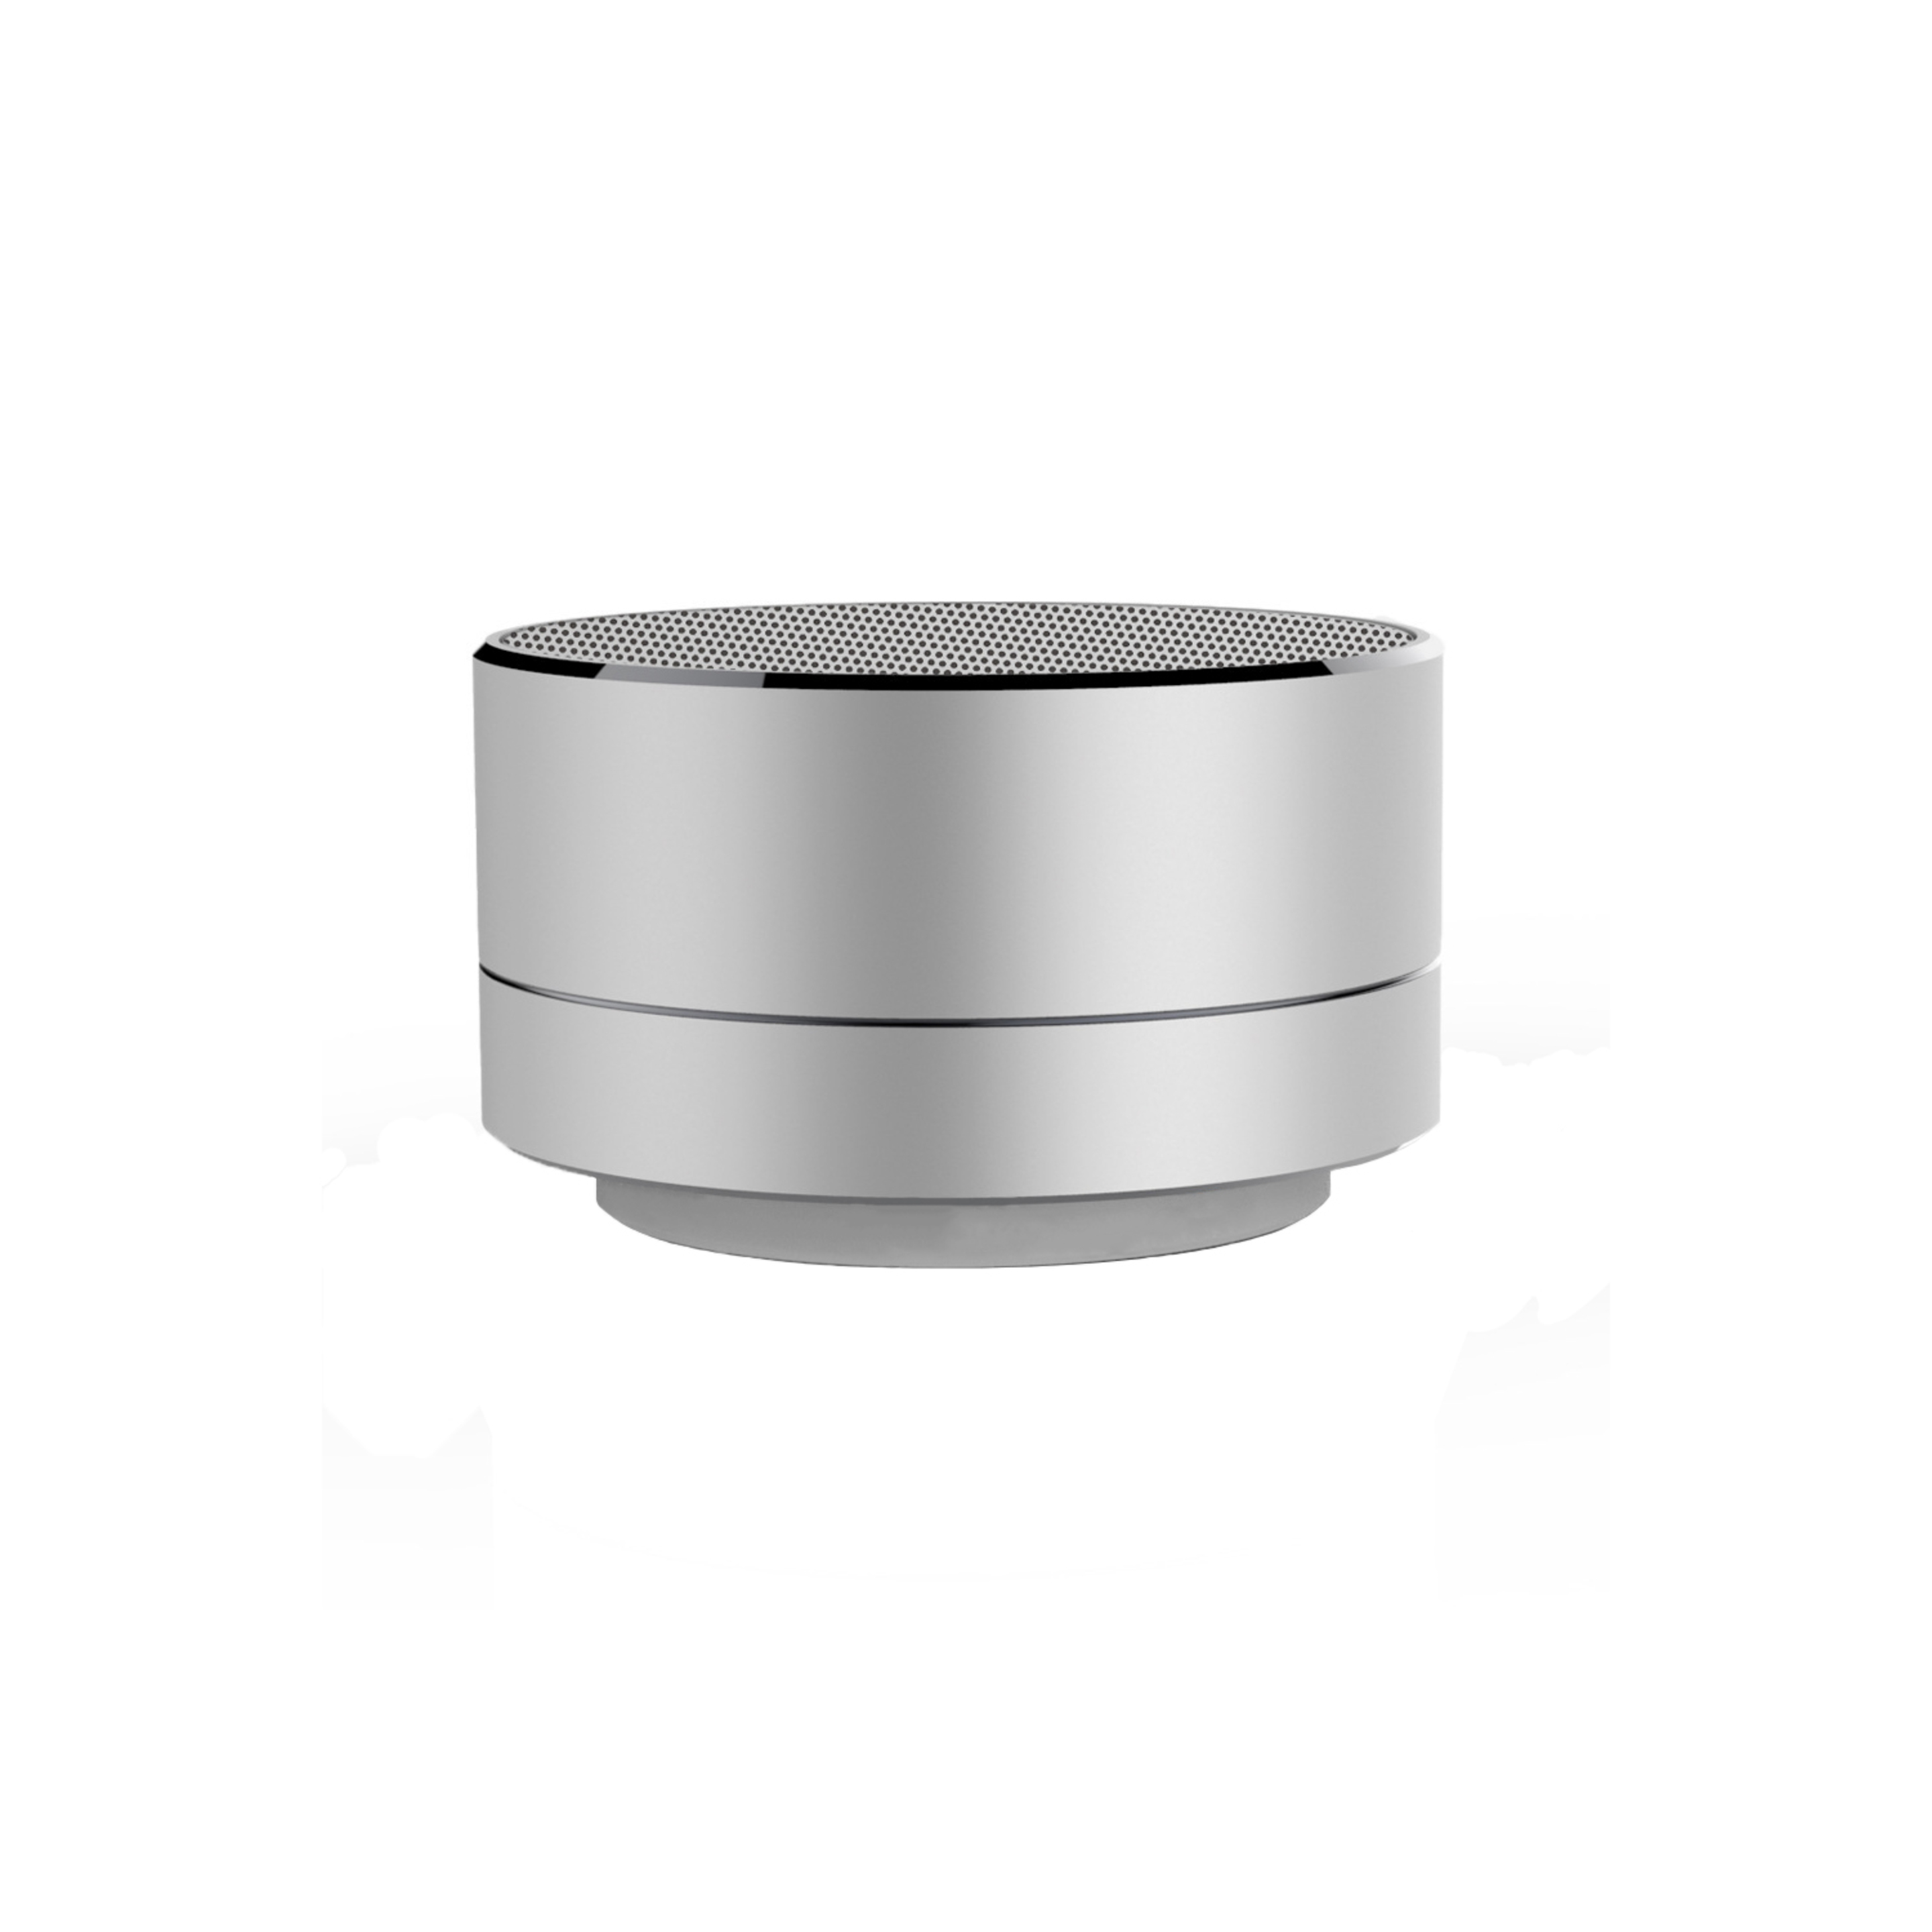 Altavoz Bluetooth Magnussen S1 - gris - 